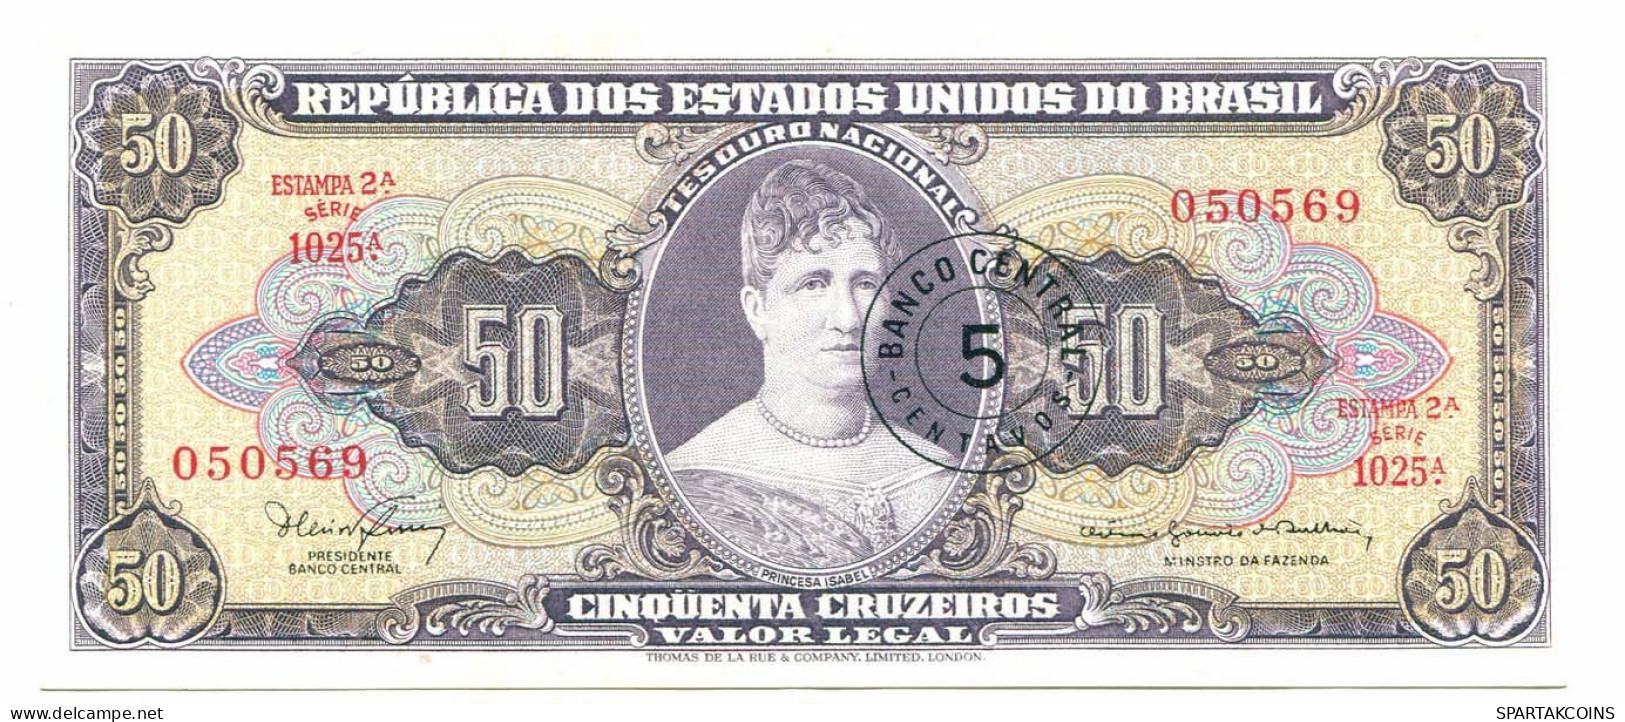 BRASIL 5 CENTAVOS ON 50 CRUZEIROS 1967 SERIE 1025A UNC Paper Money #P10841.4 - [11] Emissioni Locali